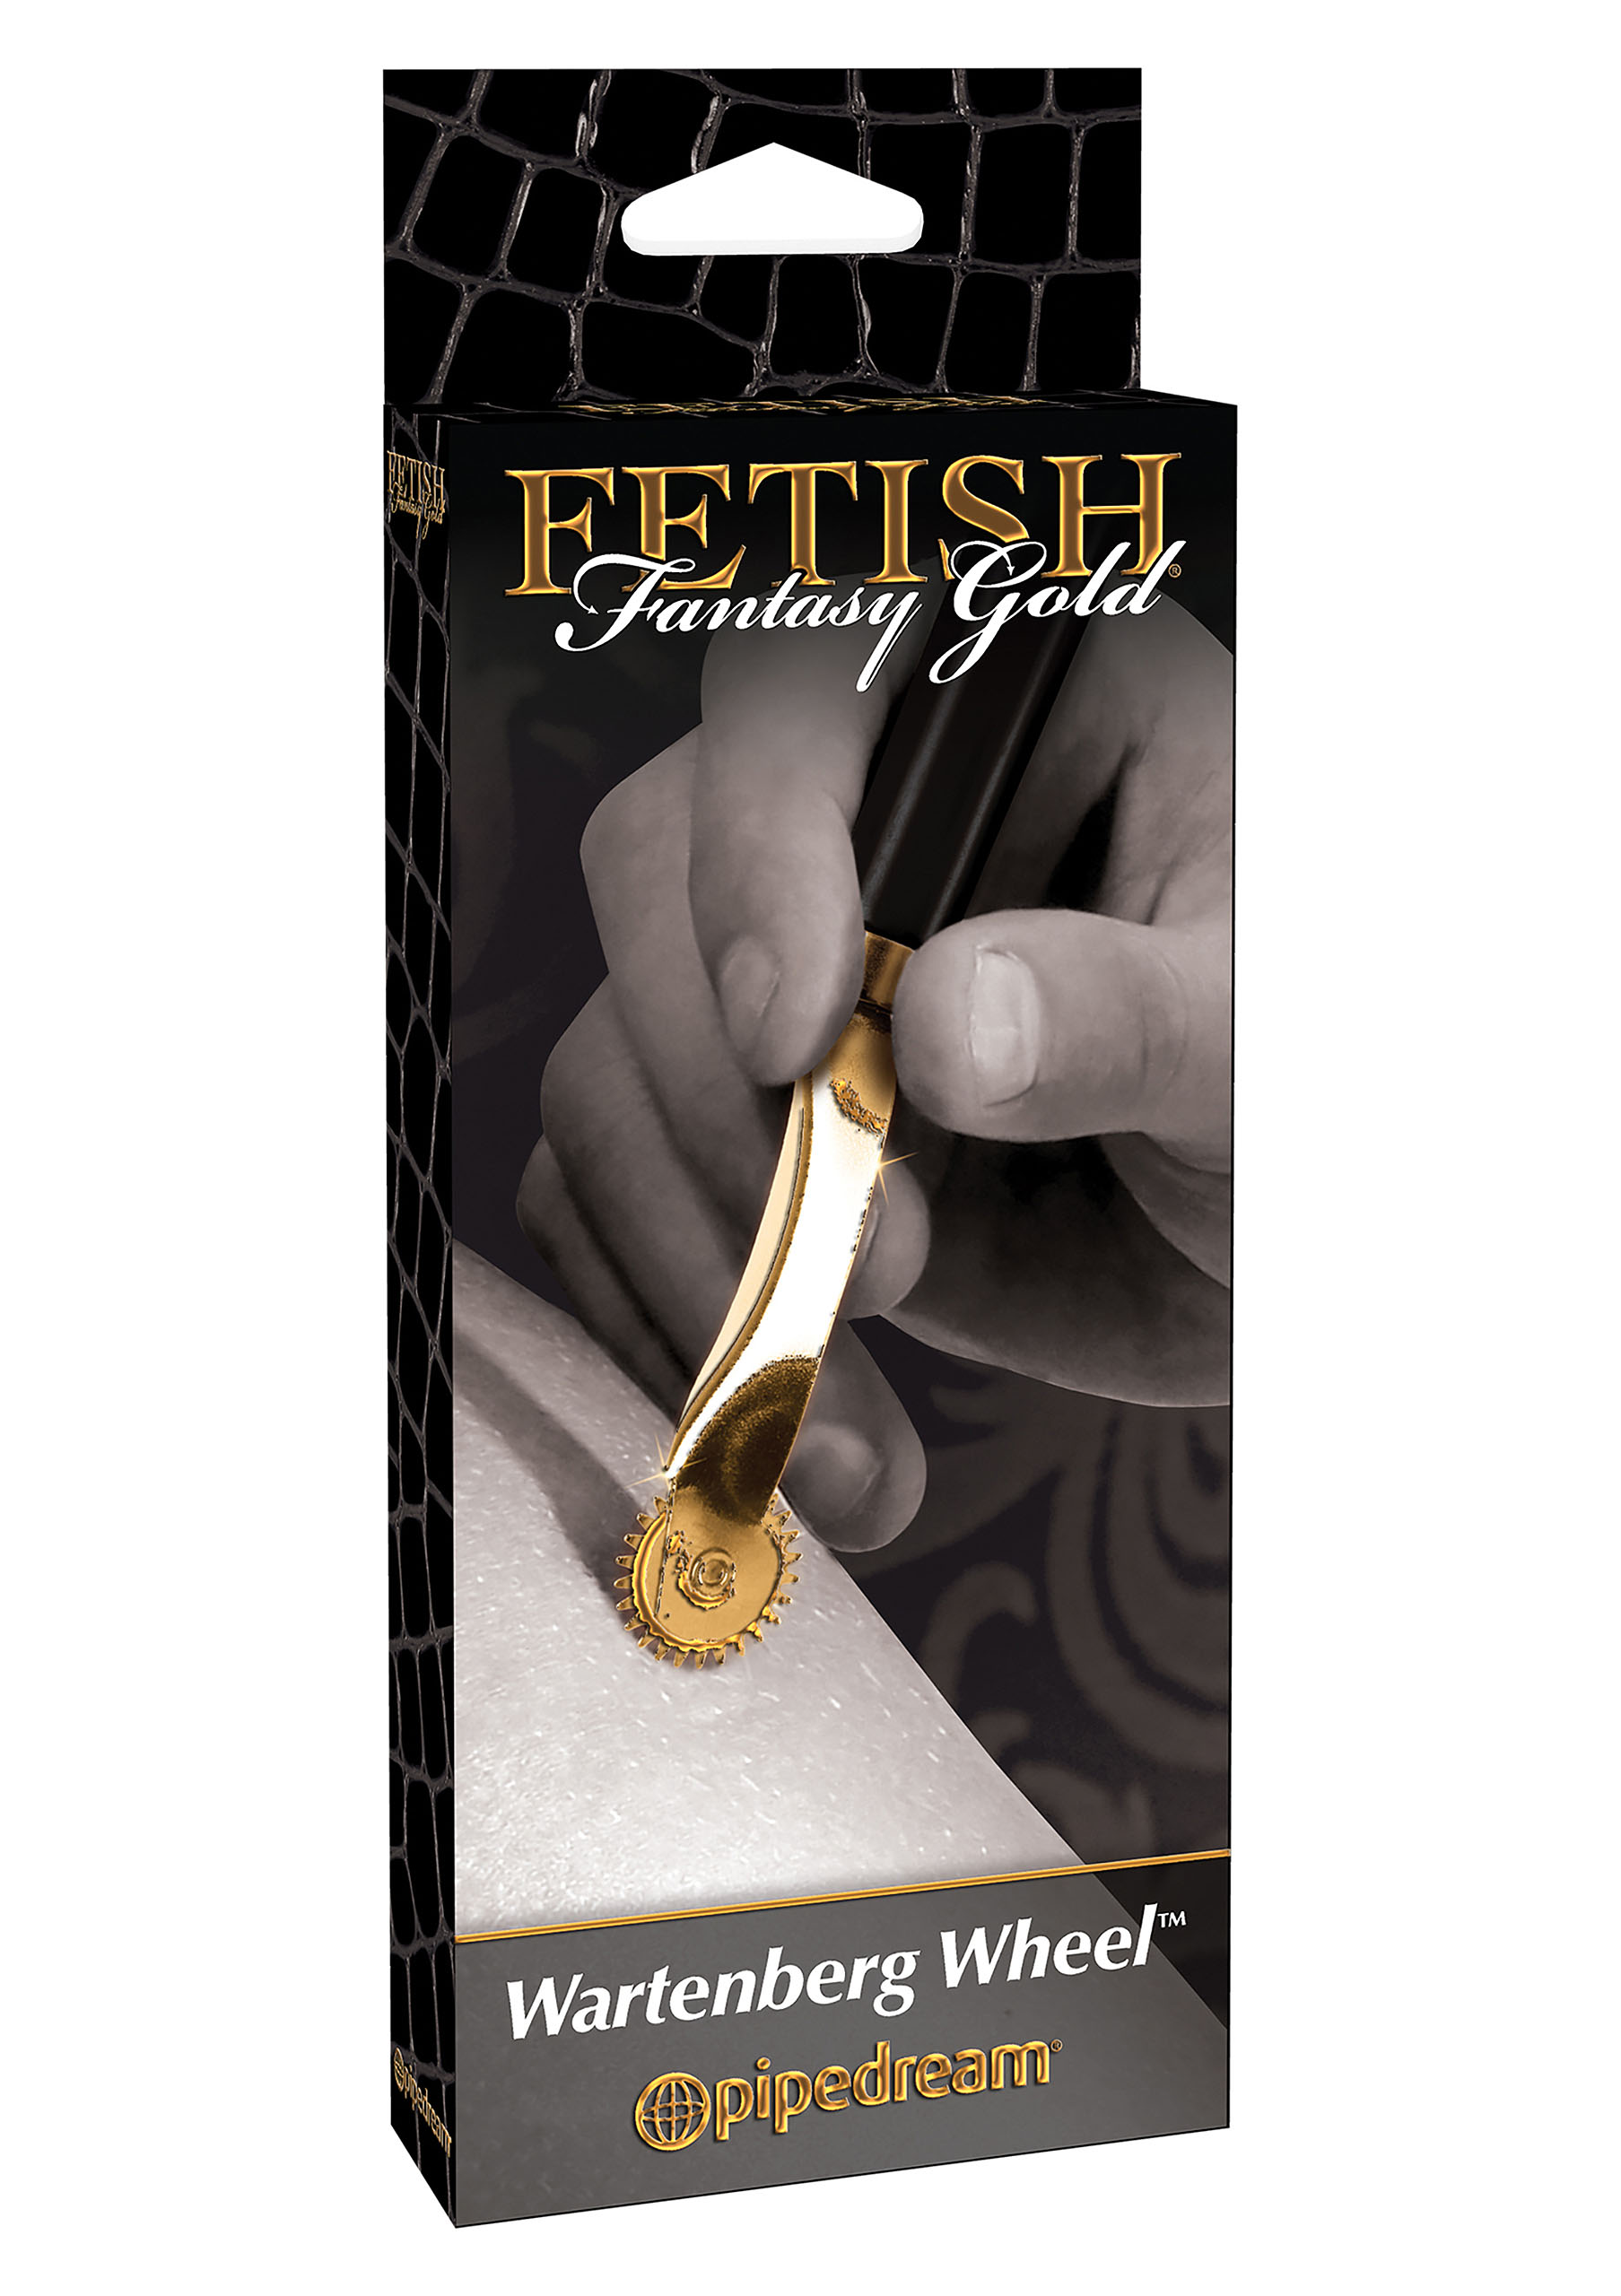 Fetish Fantasy Gold Wartenberg Wheel